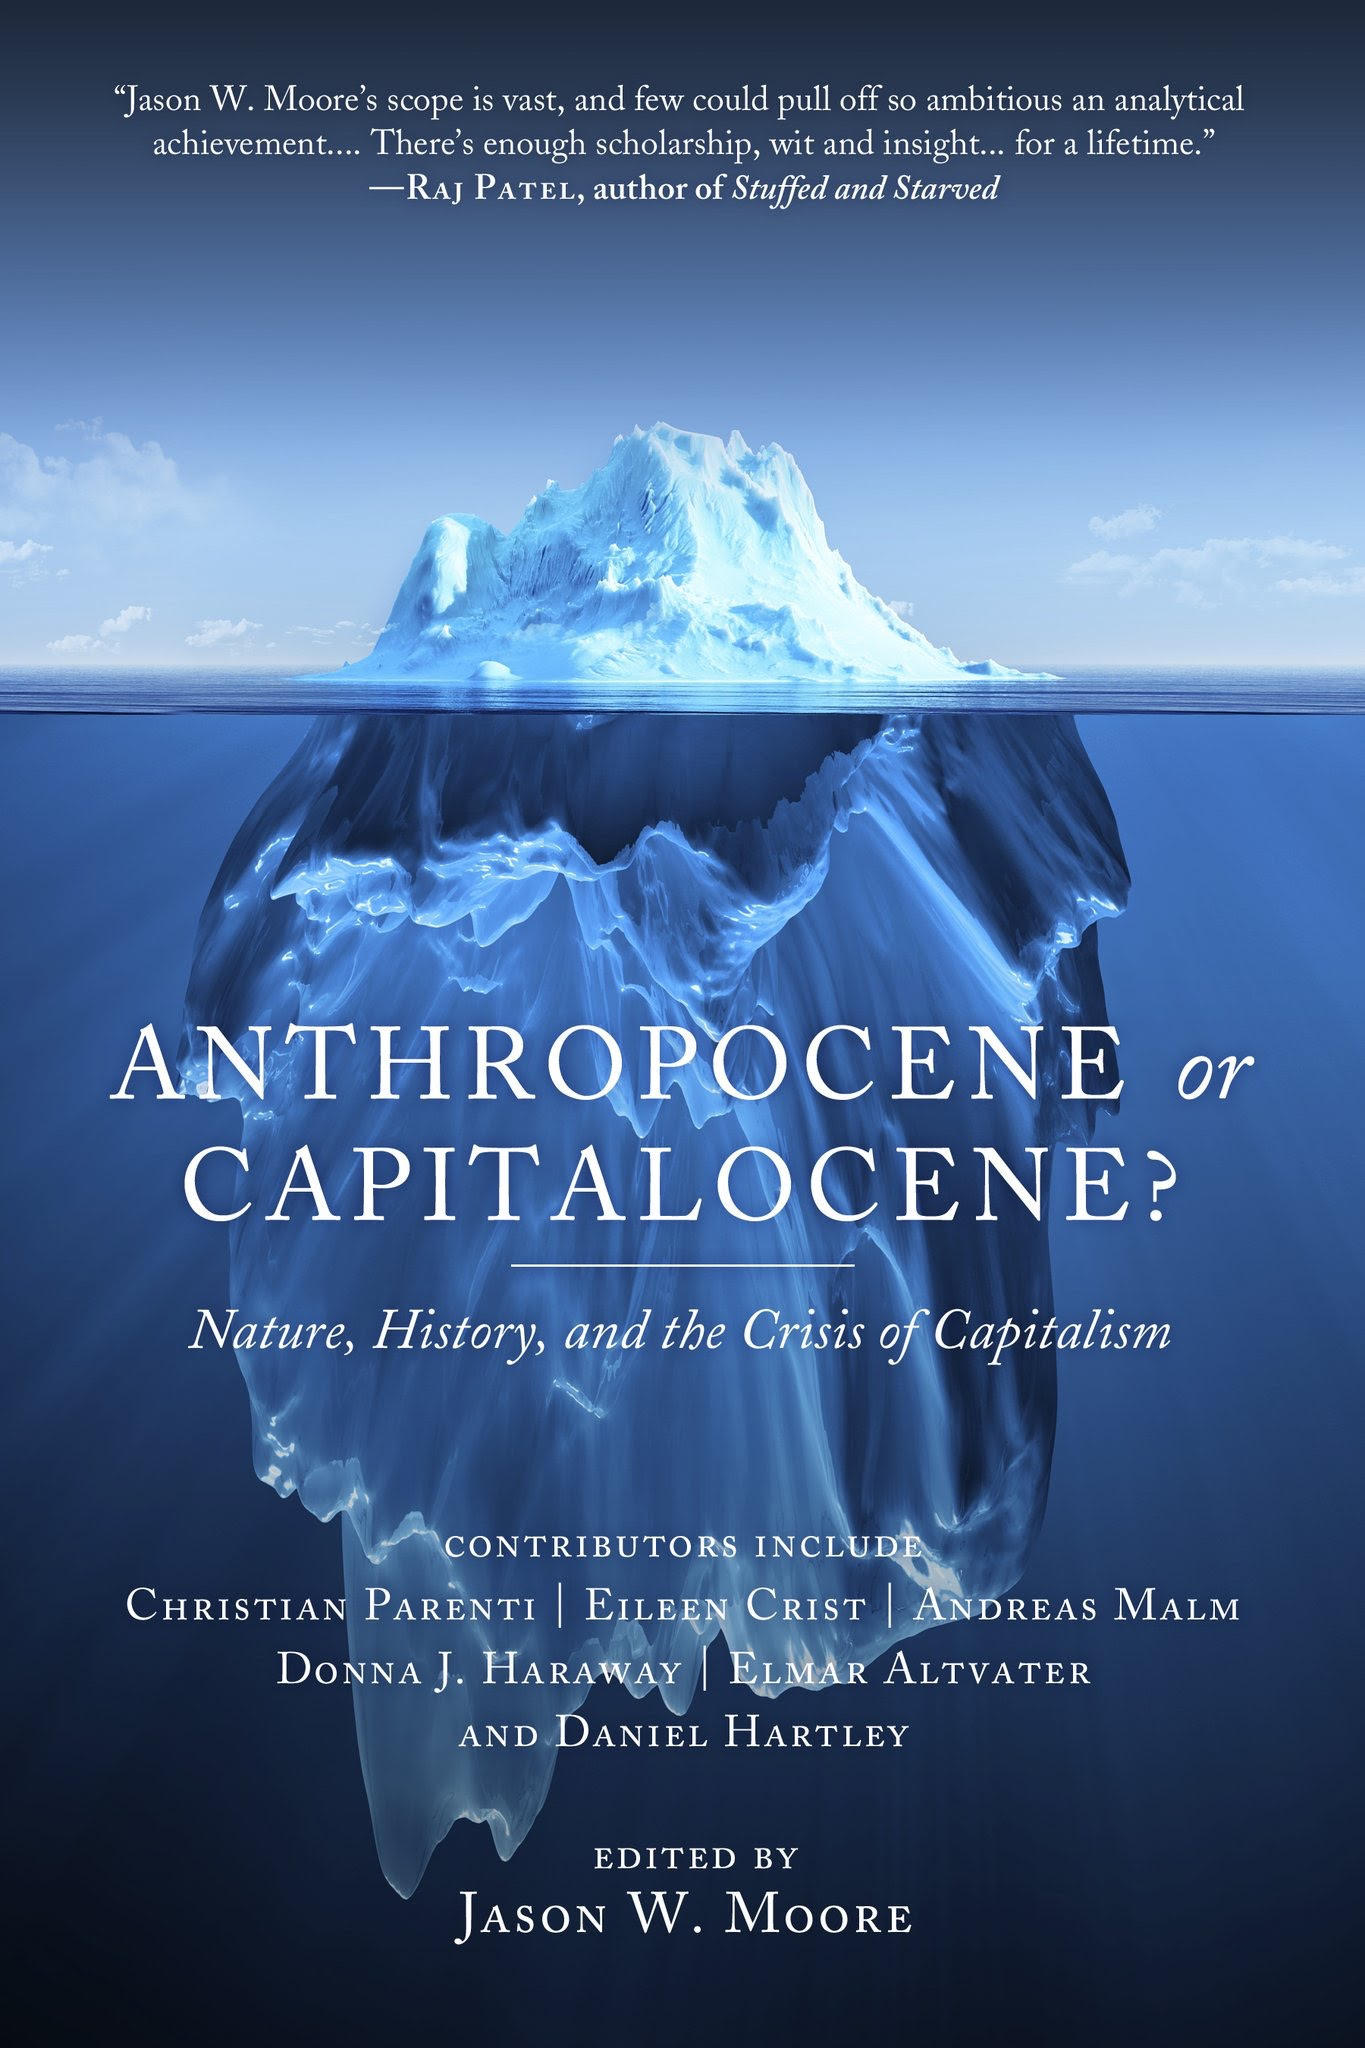 https://www.amazon.com/Anthropocene-Capitalocene-Nature-History-Capitalism/dp/1629631485